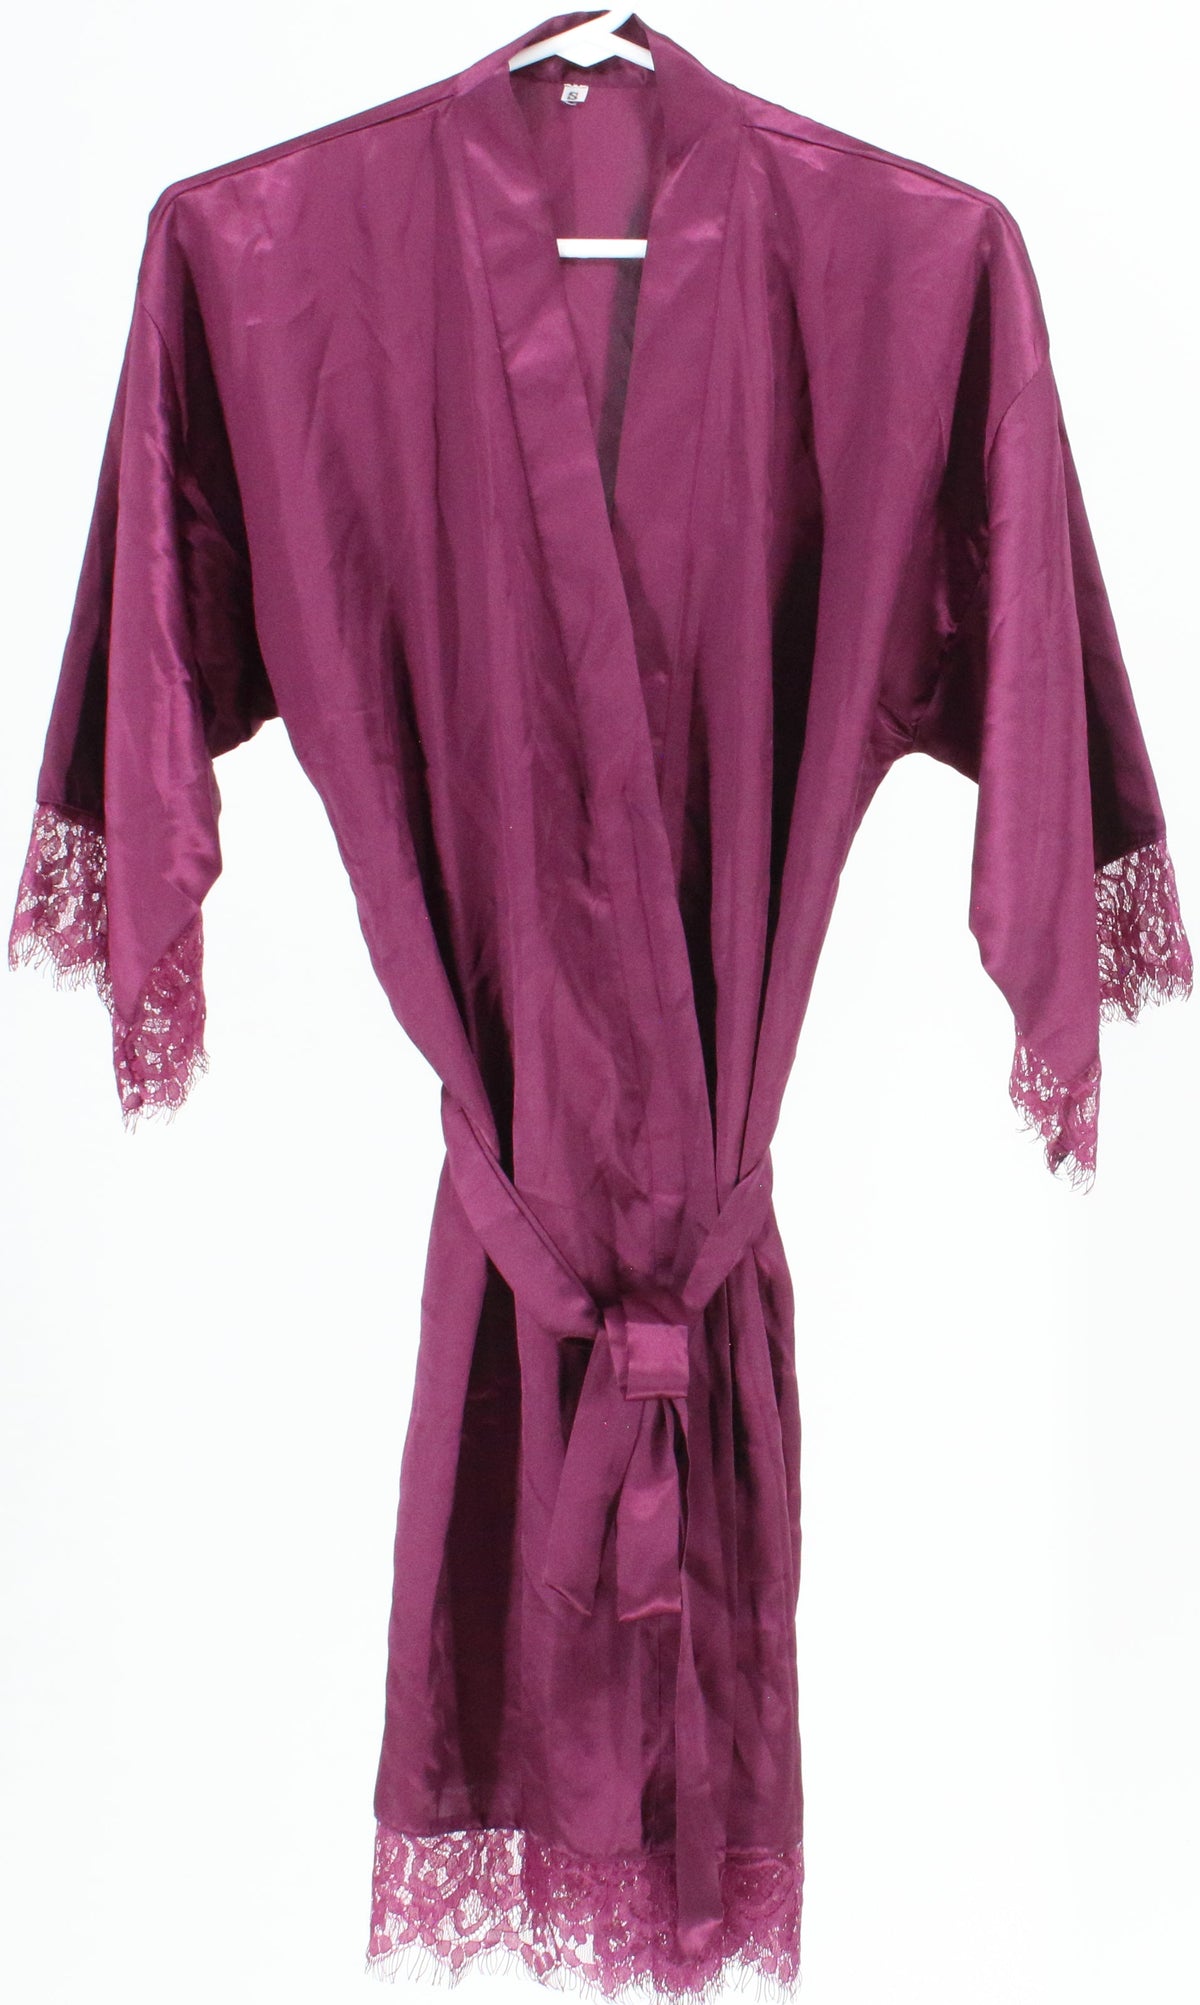 Purple Satin Robe With Lace Hem Robe